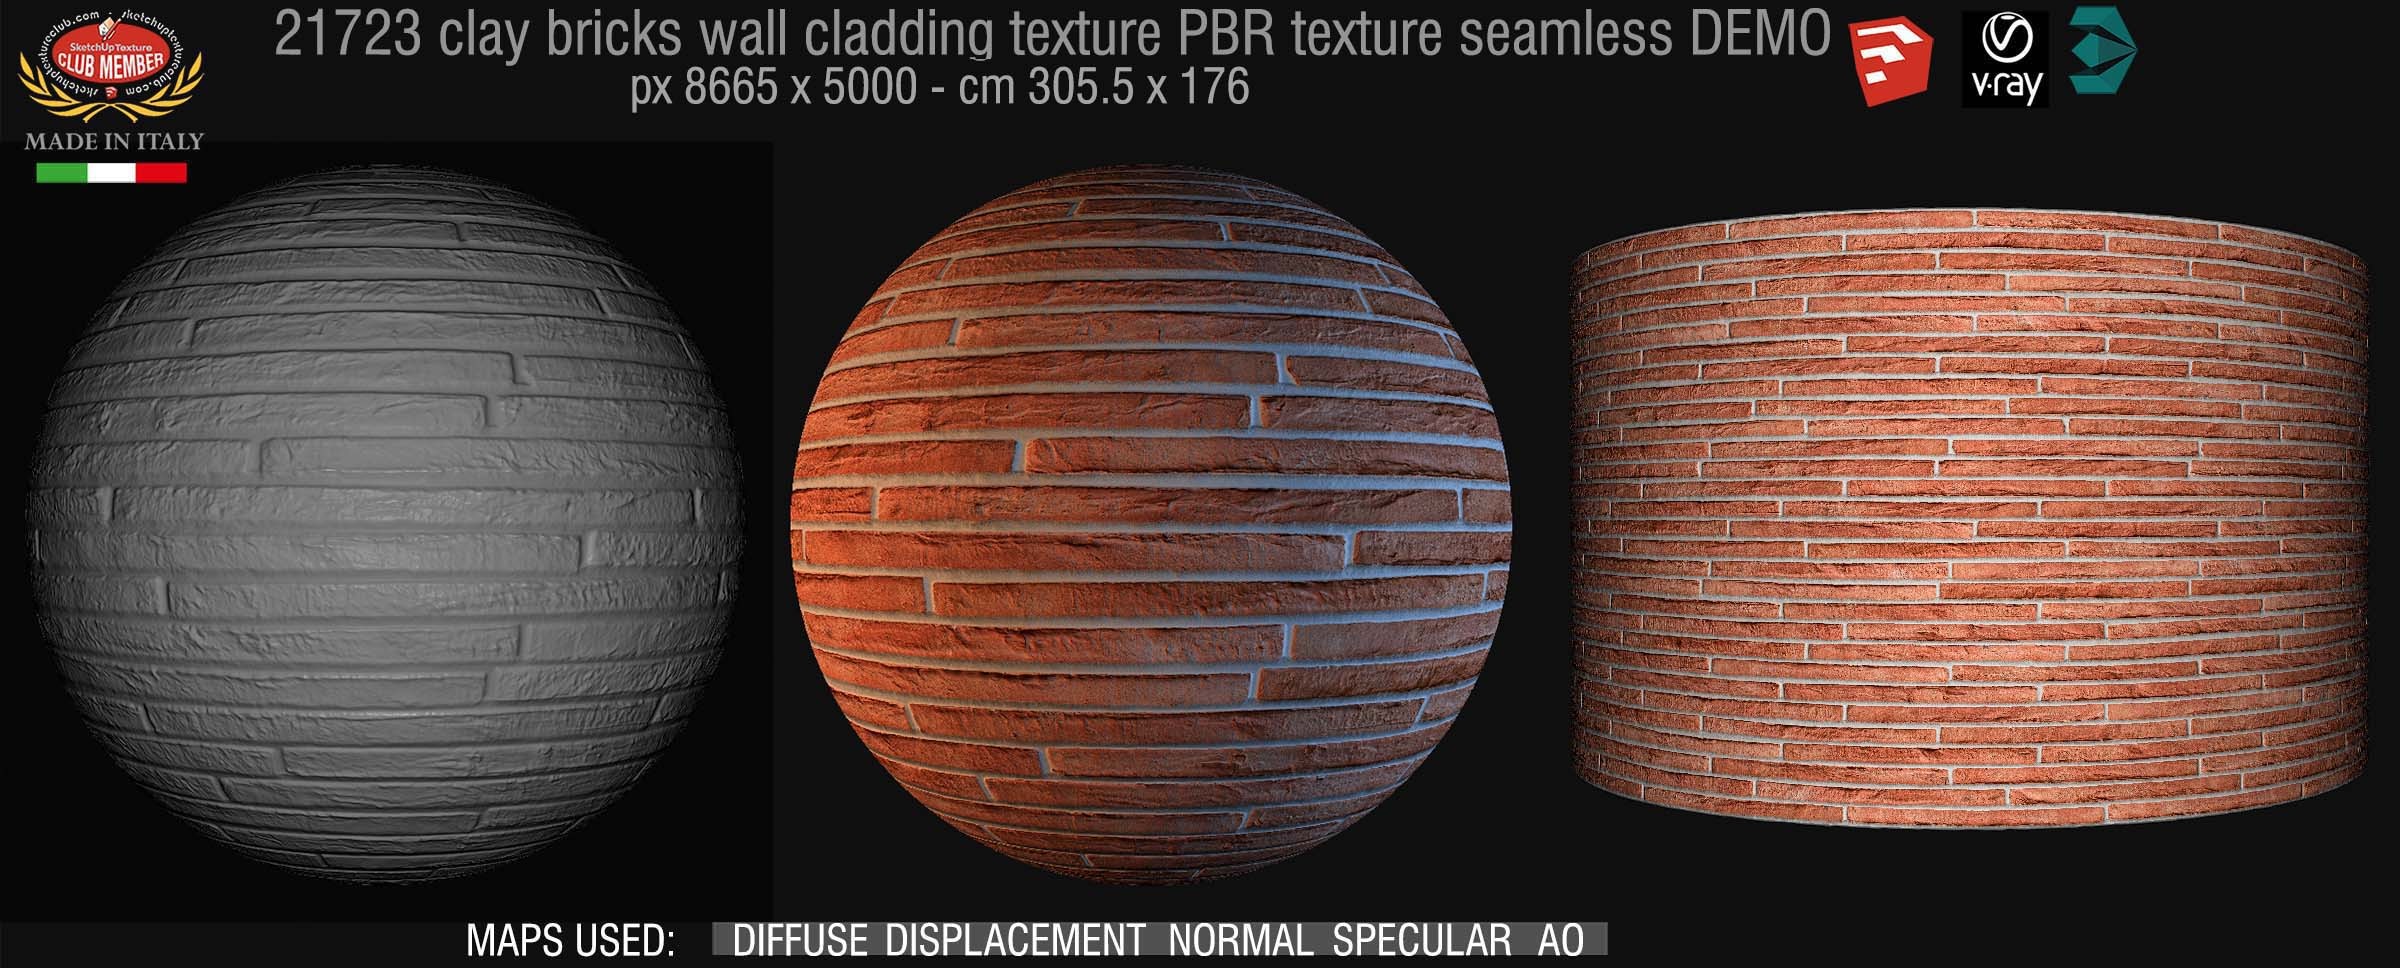 21723 Clay bricks wall cladding PBR texture seamless DEMO